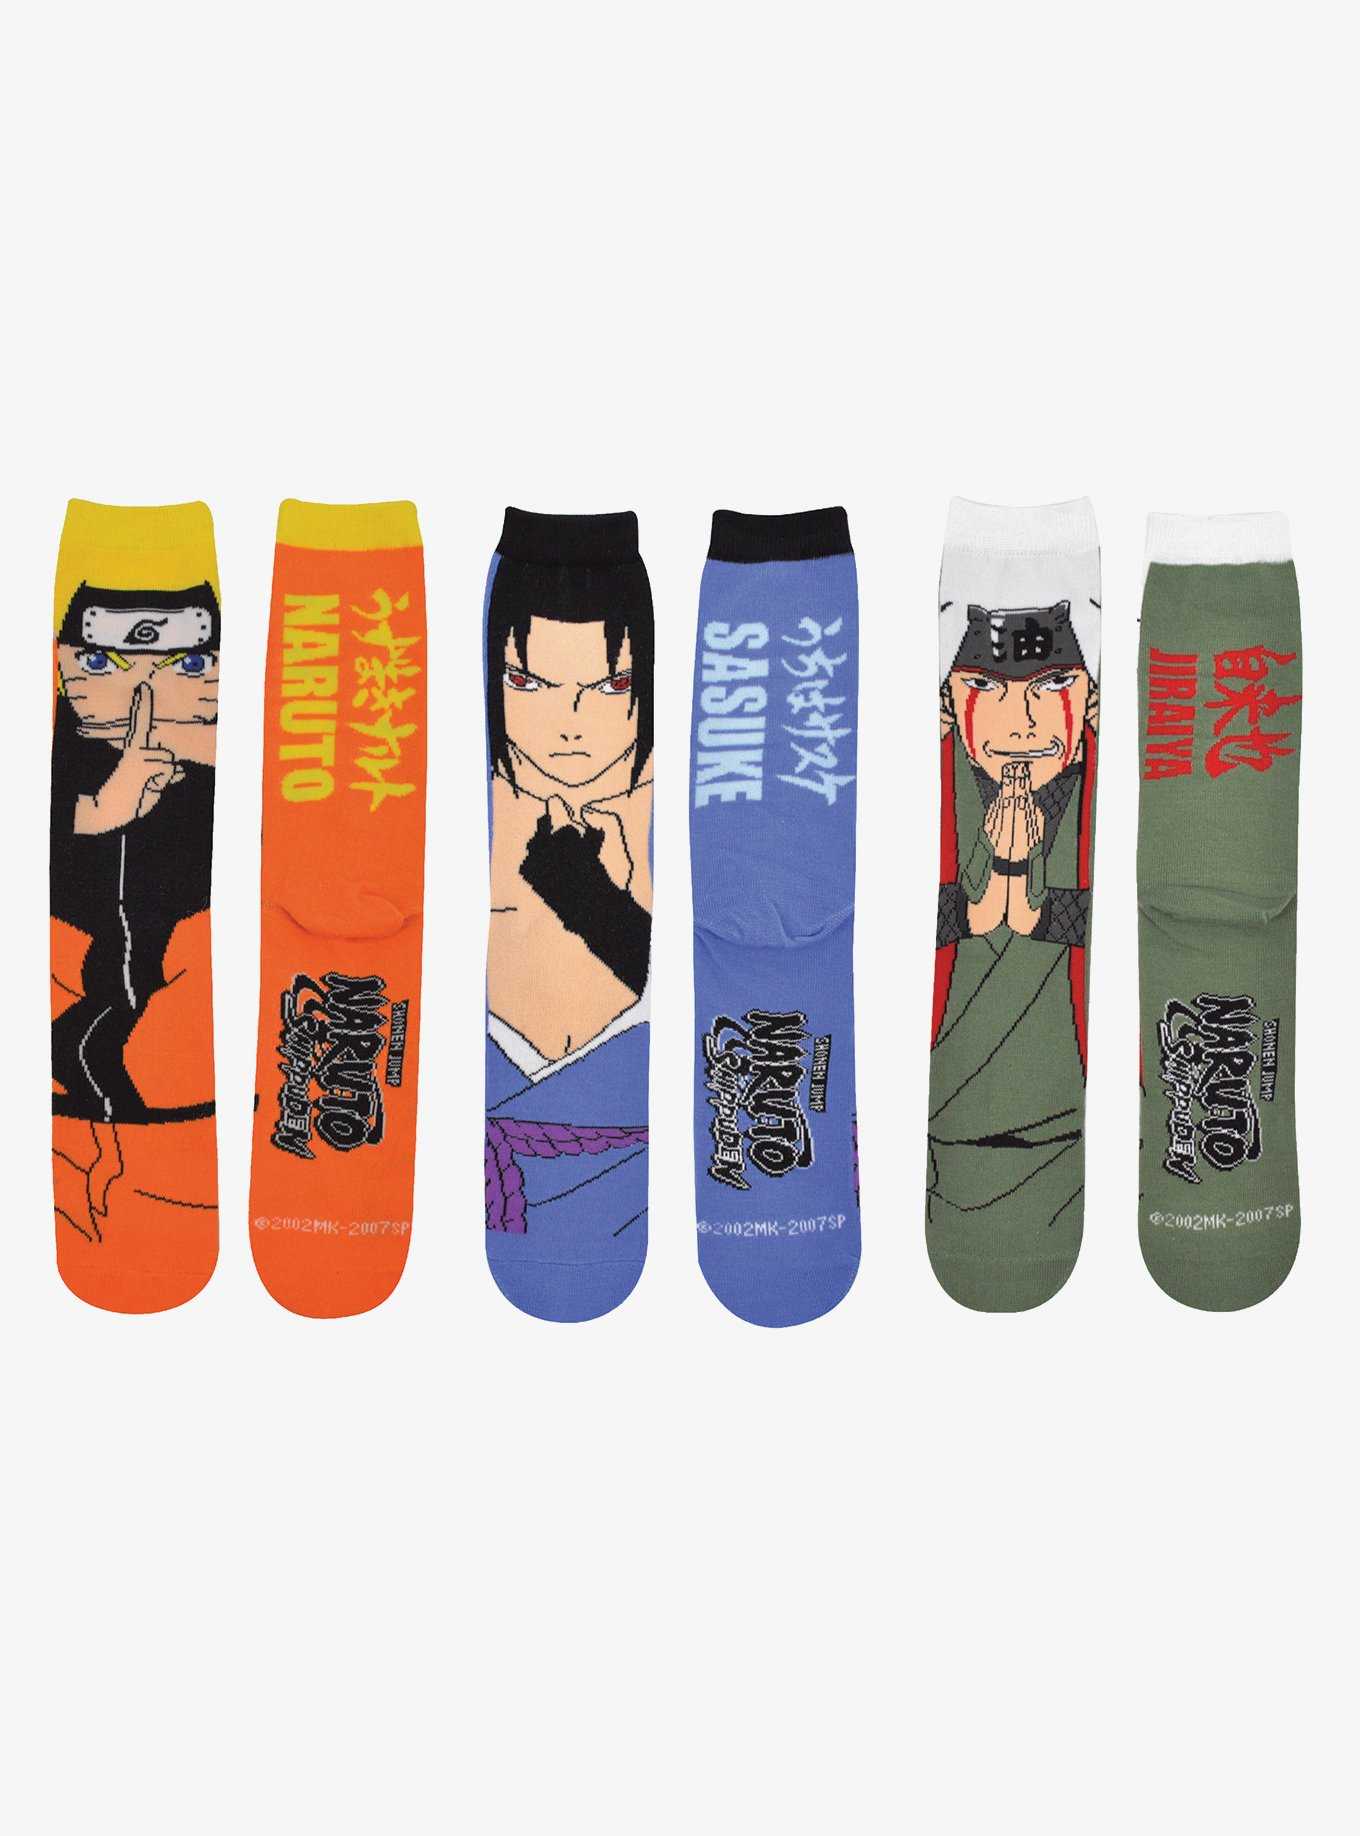 Naruto Shippuden 3 PK Crew Socks Bundle, , hi-res